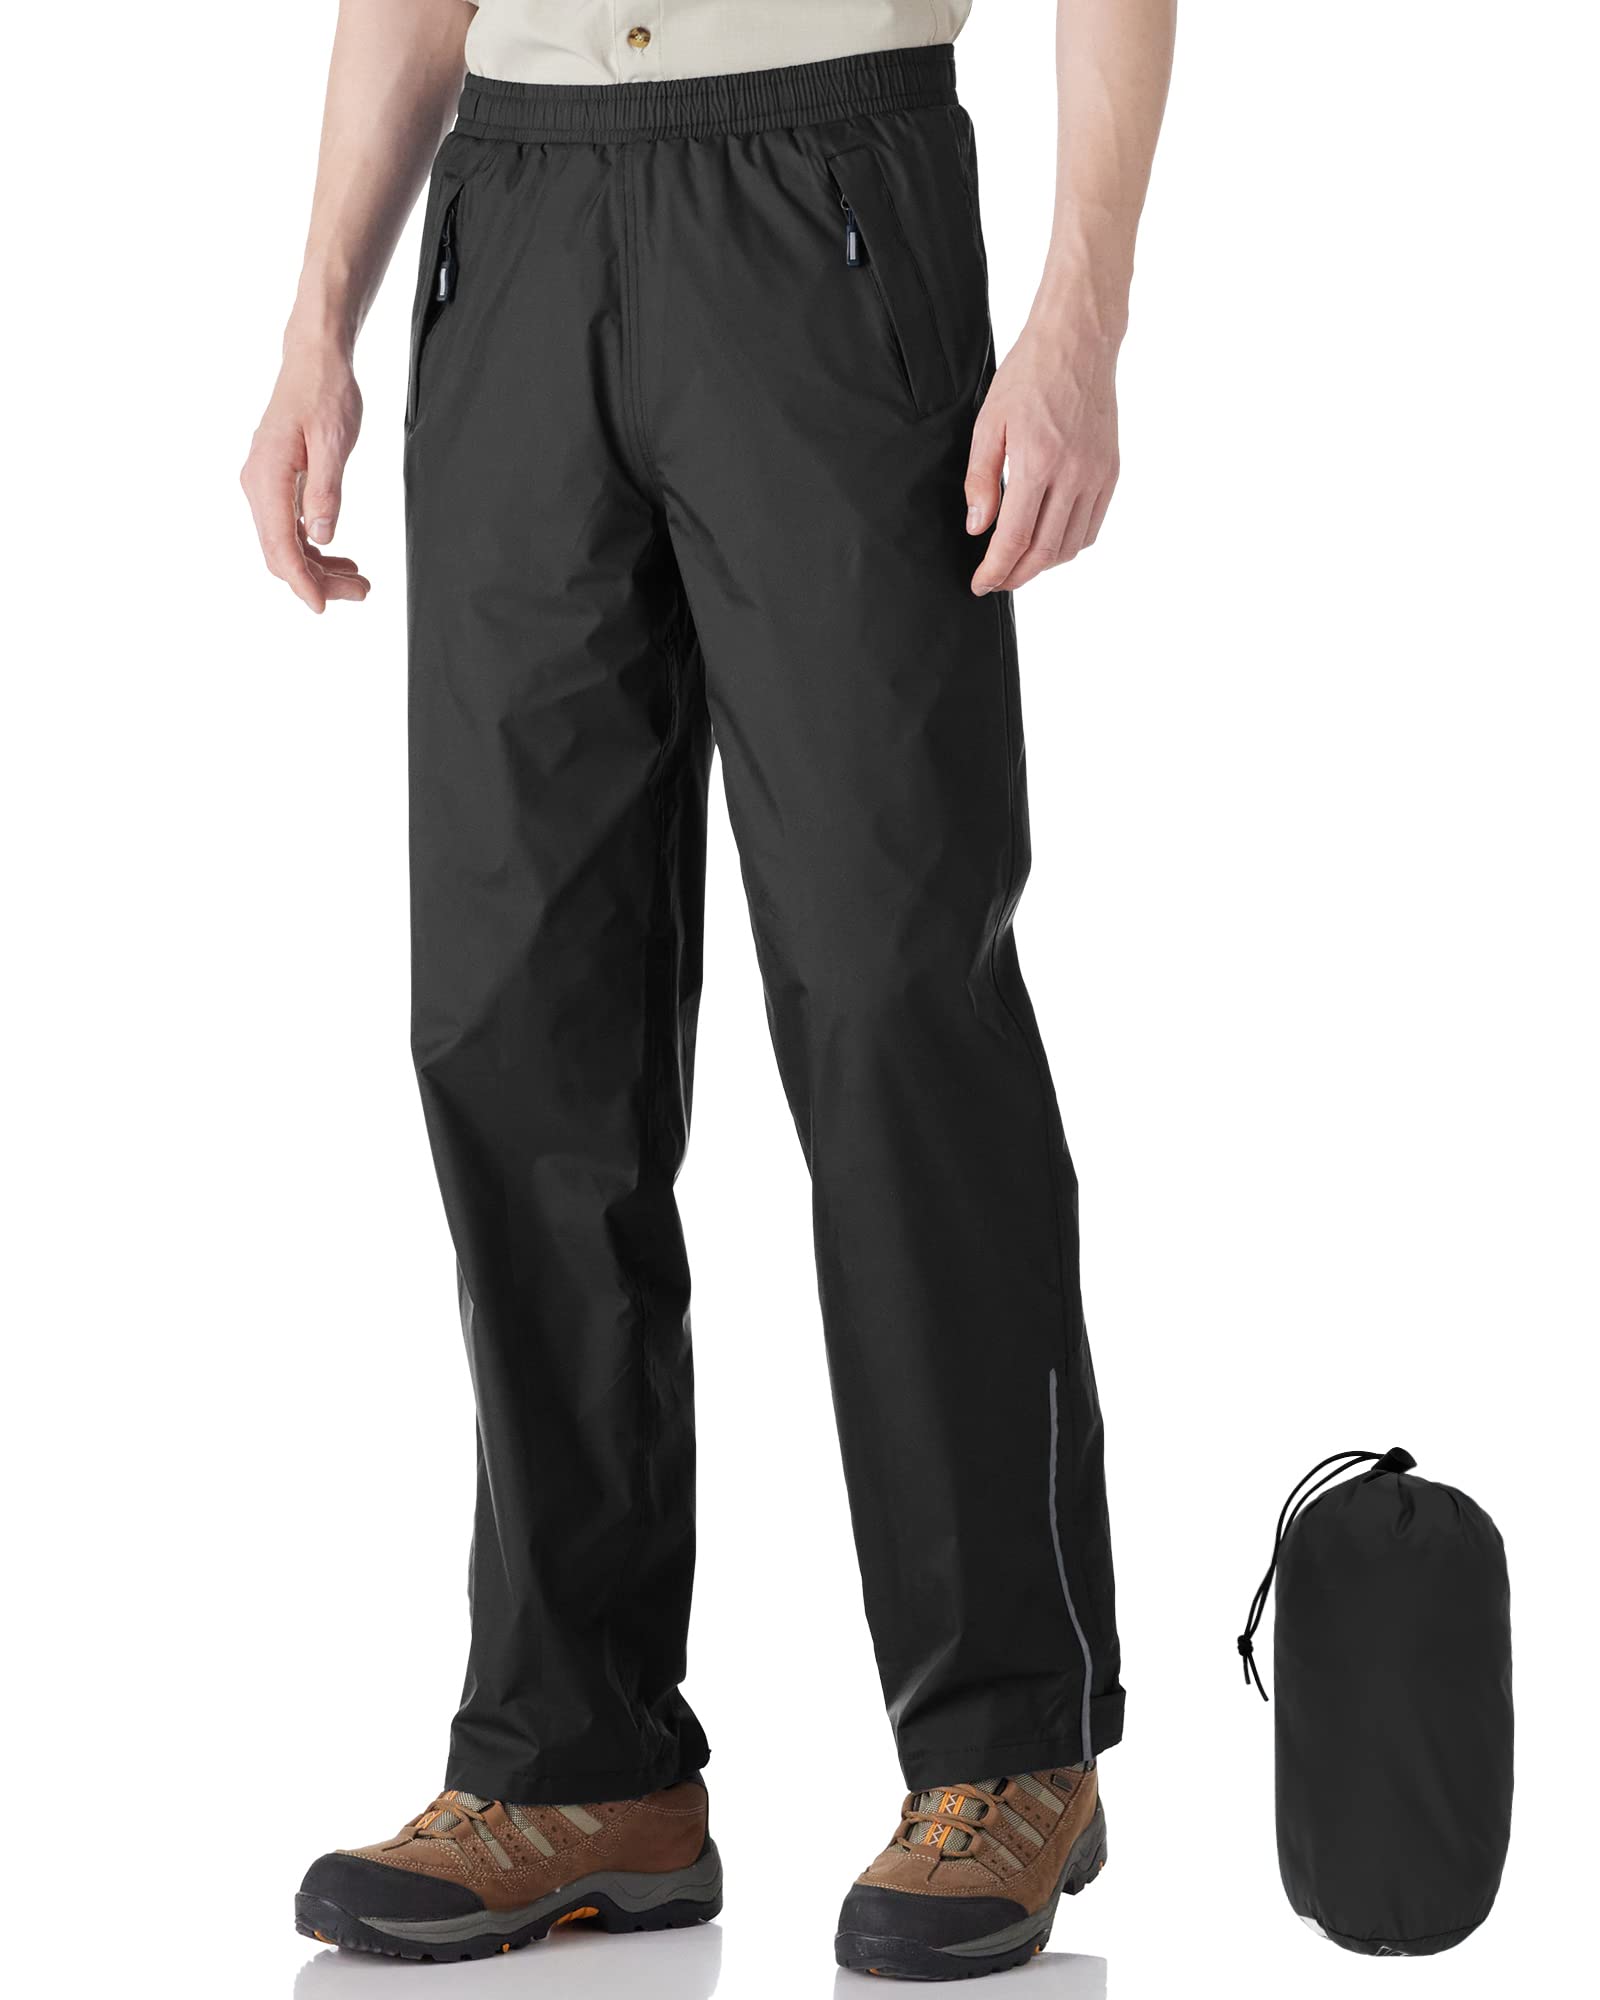 Columbia Men's Big & Tall Rebel Roamer Rain Pants, Black, X-Small x 30  Inseam UK : Amazon.co.uk: Fashion